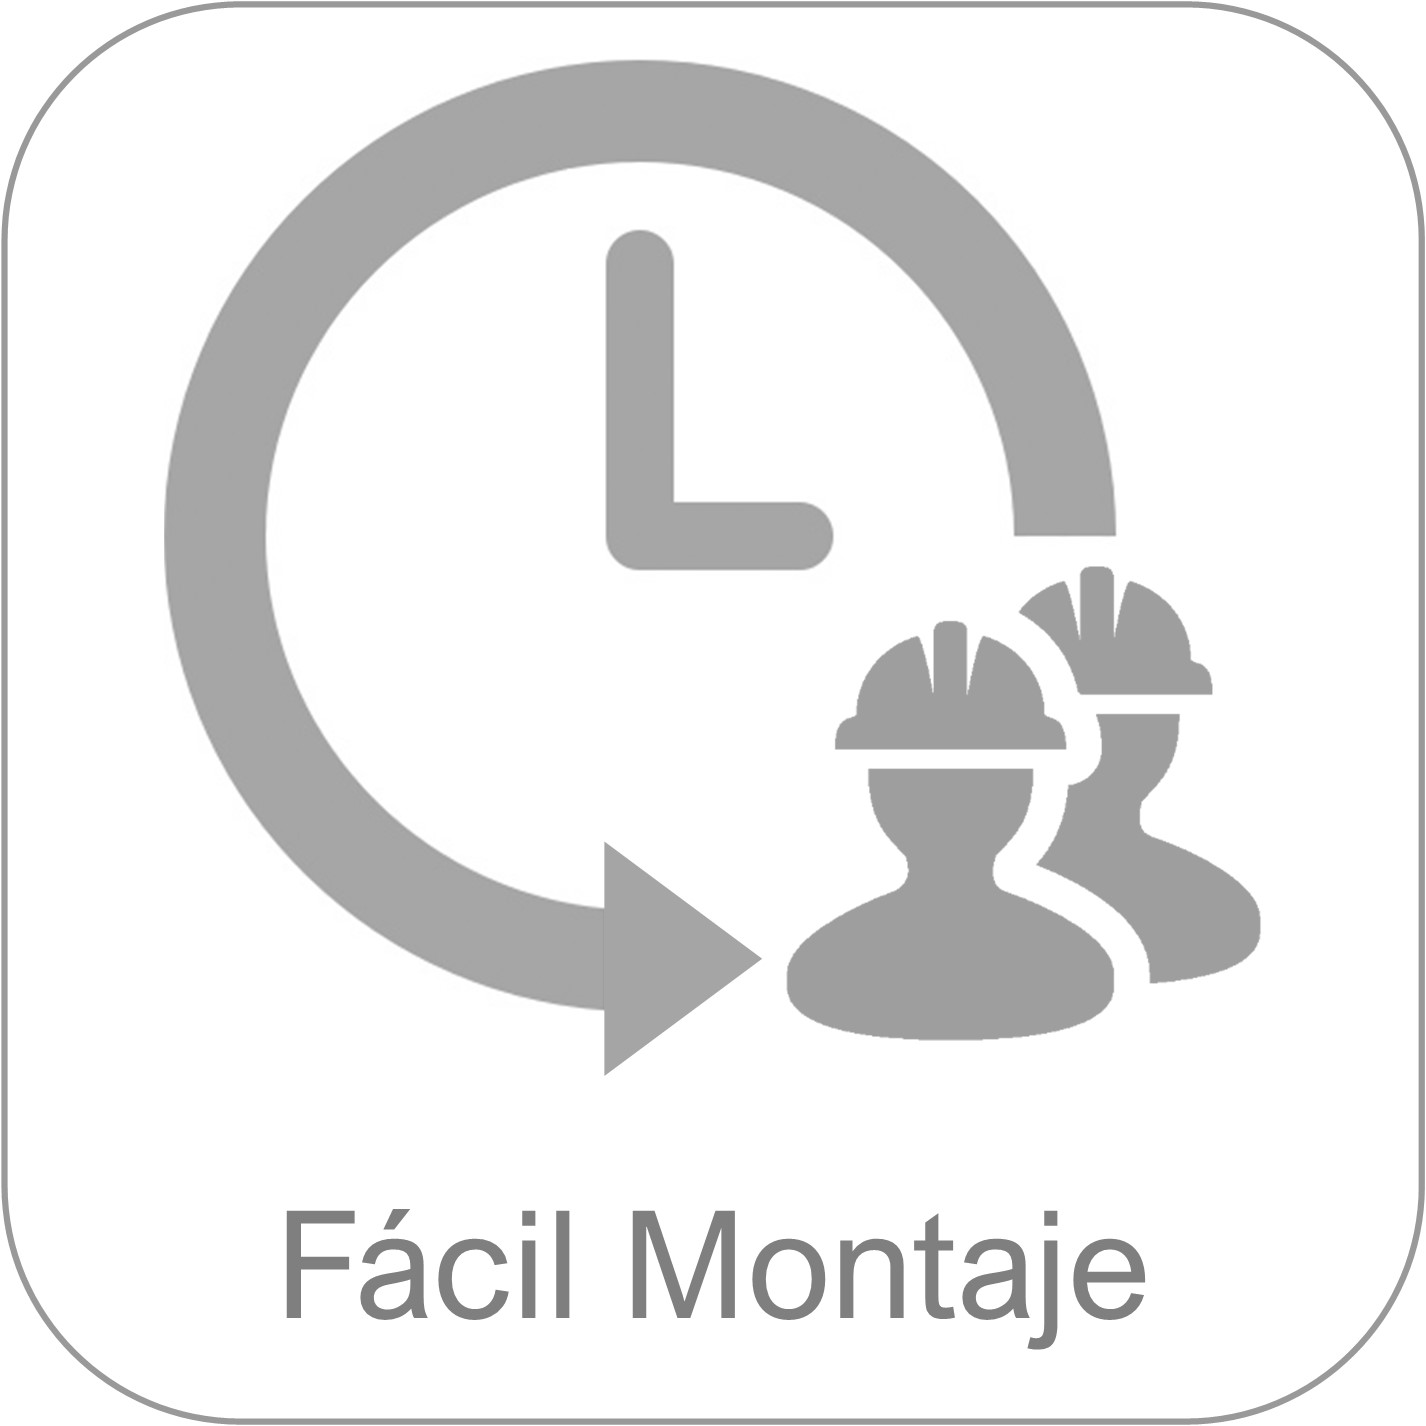 Monobloque NIC15 - Oficinas móviles - Fácil montaje